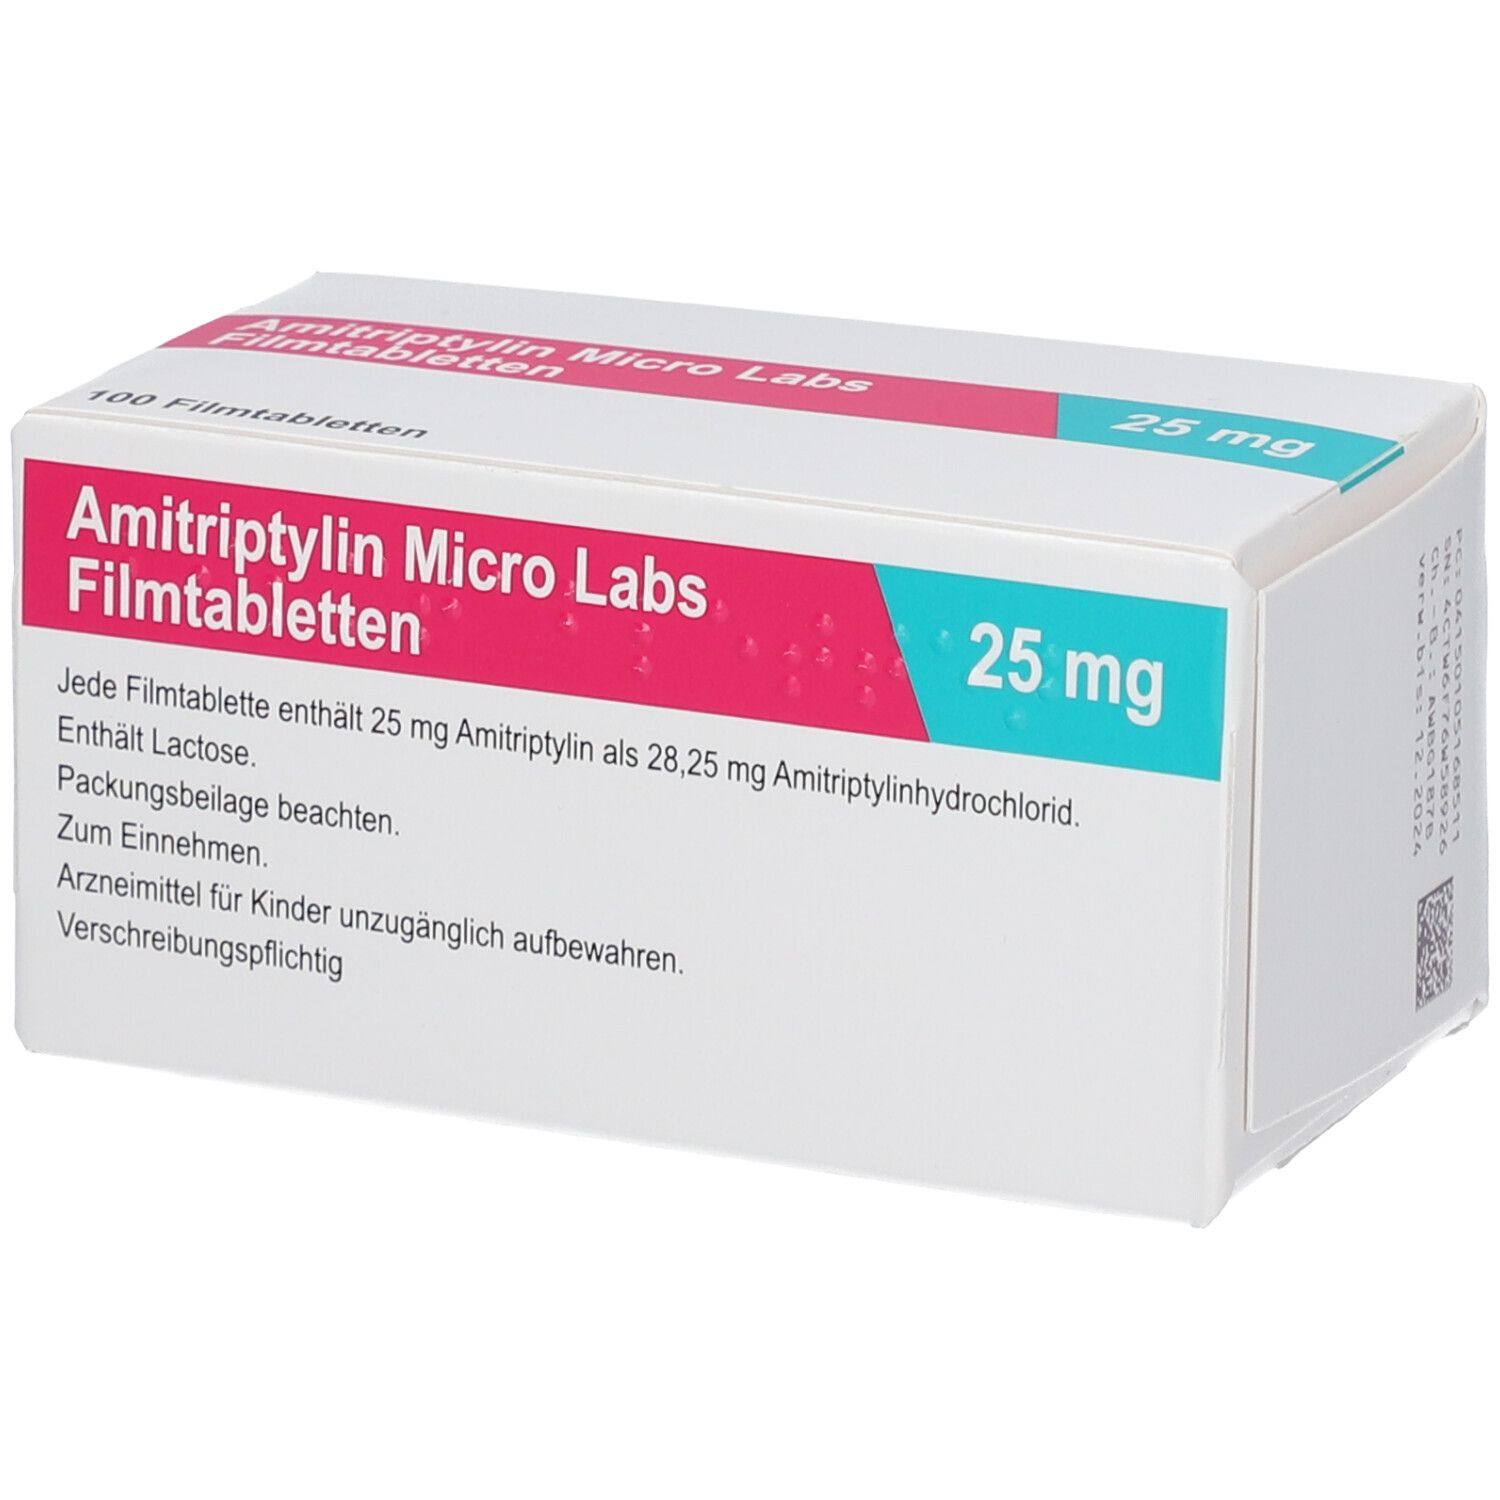 Amitriptylin Micro Labs 25 mg